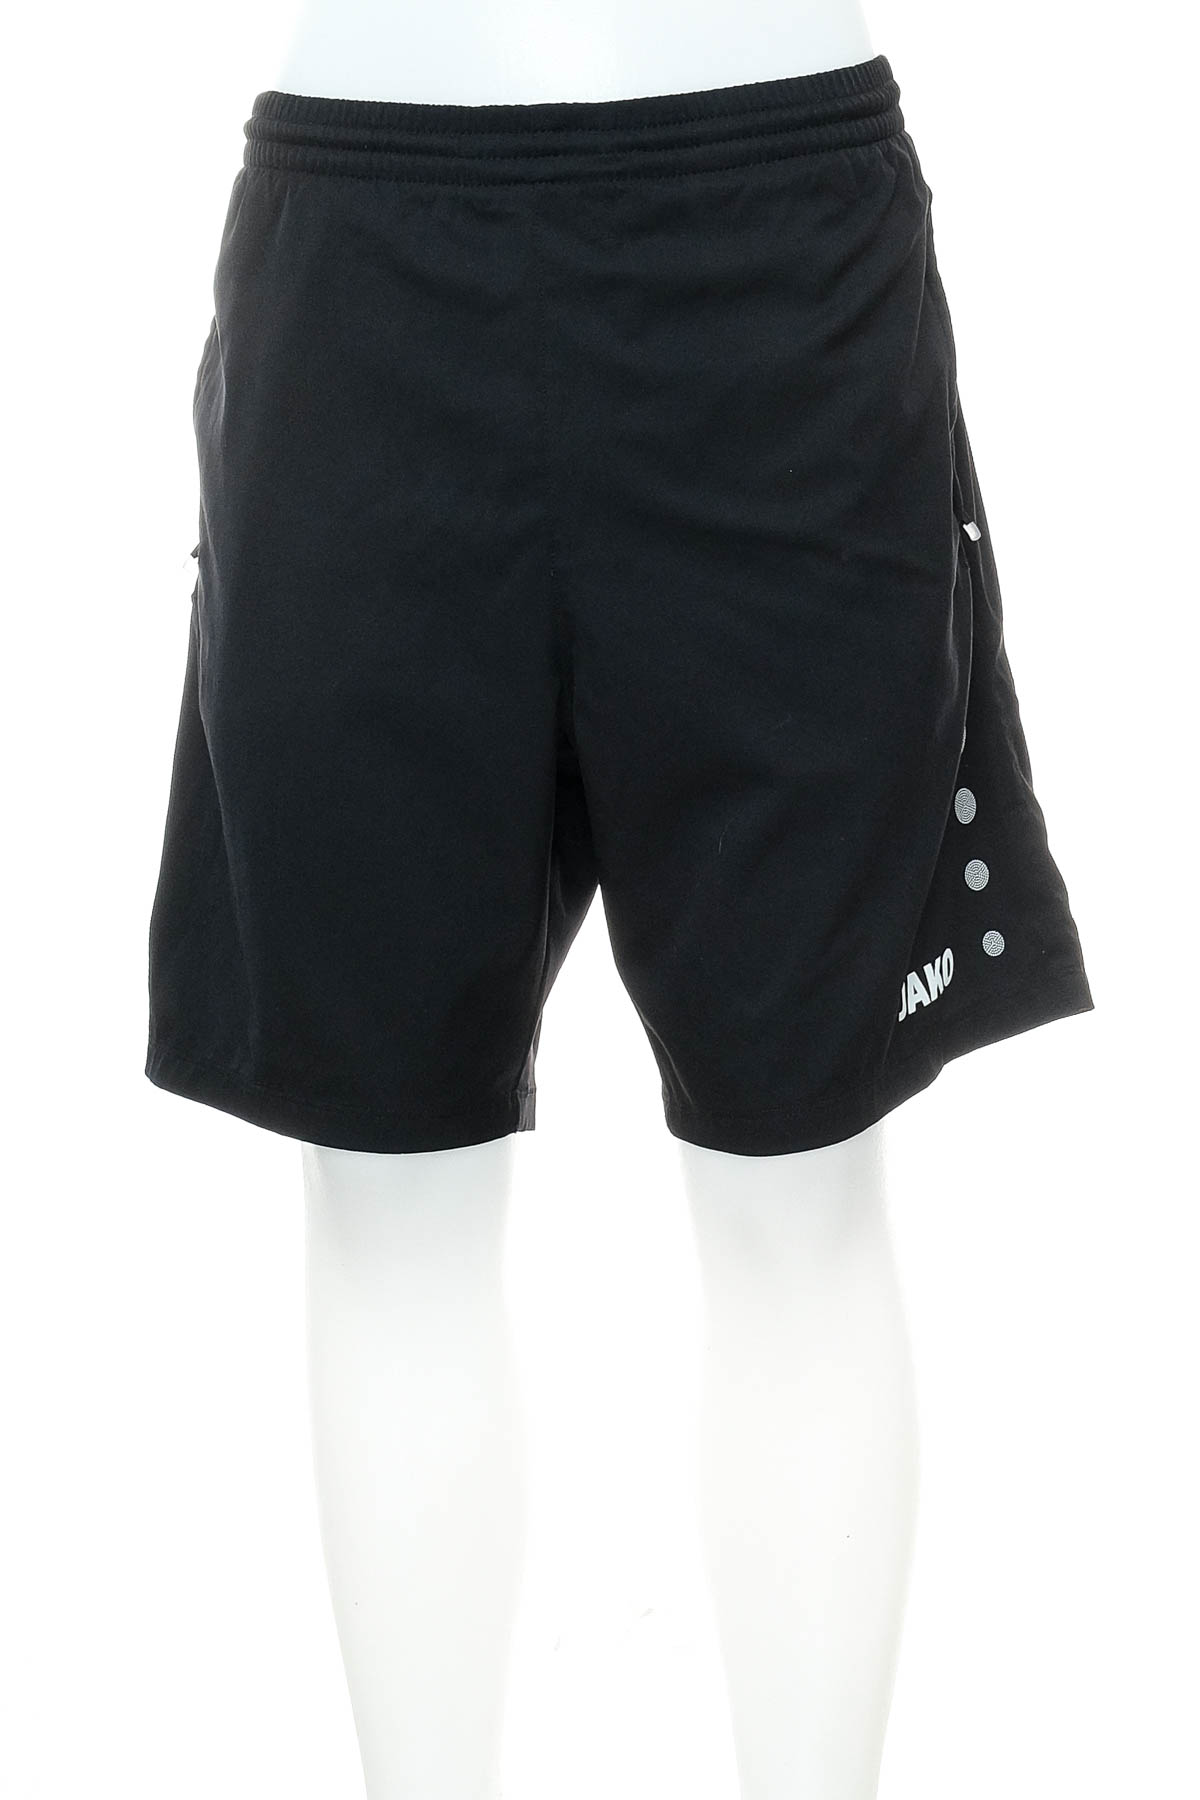 Men's shorts - Jako - 0